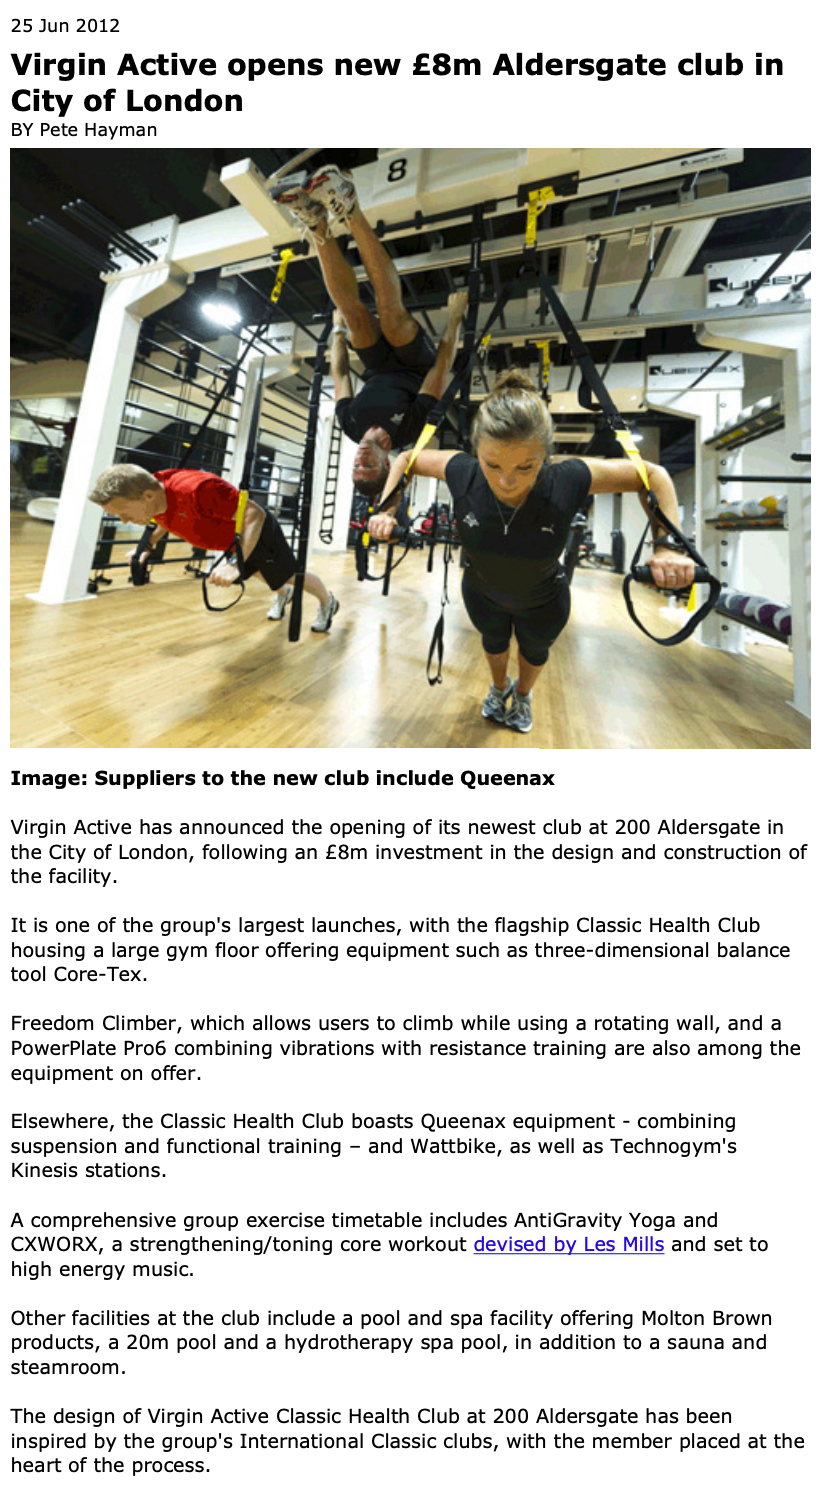 LEISUREDESIGNERS.COM, JUNE 25, 2012: Virgin Active opens new £8m Aldersgate club in City of London